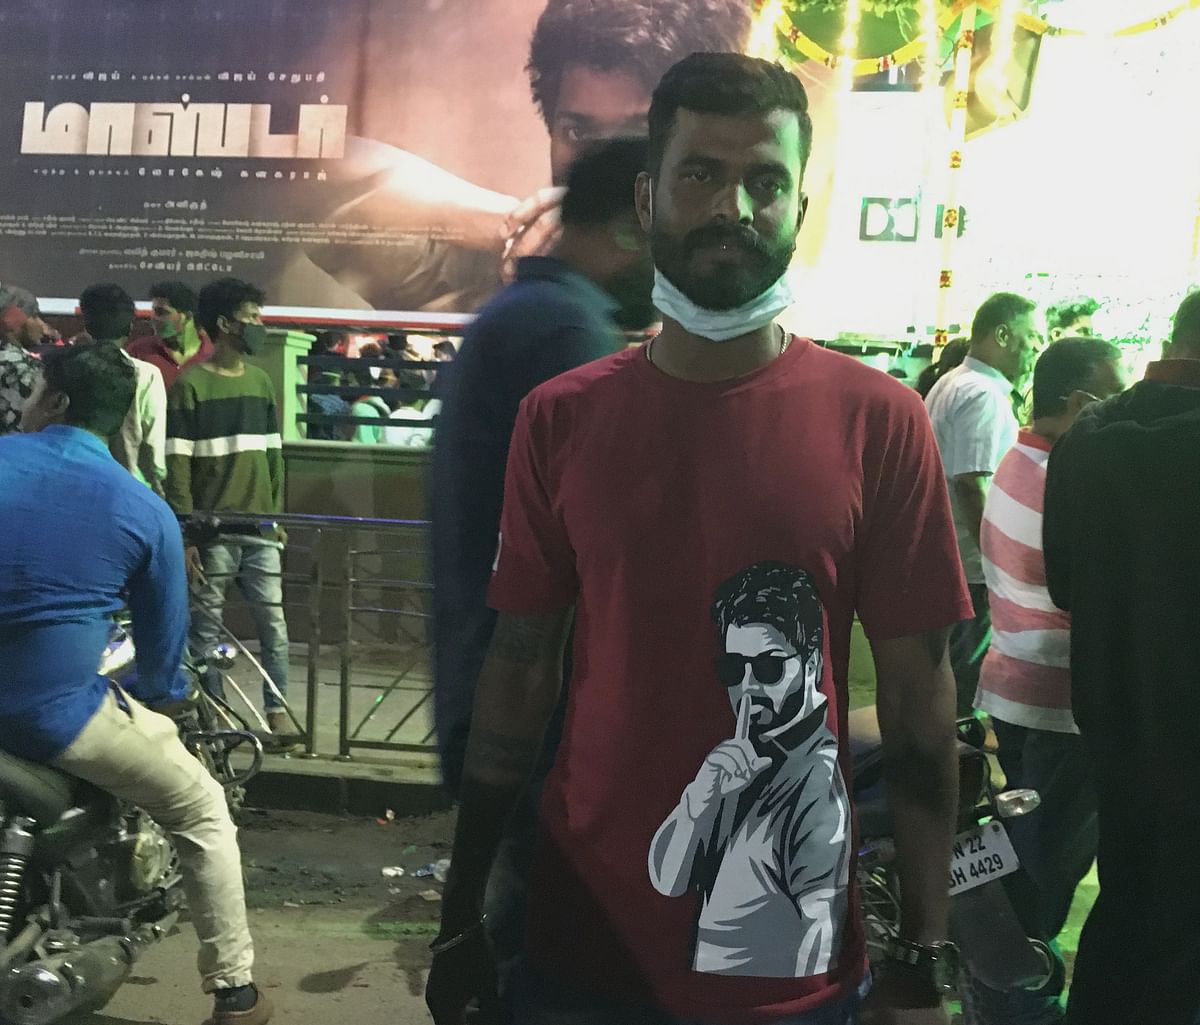 Guru has been a Vijay’s fan since childhood and has named his child Vijay.